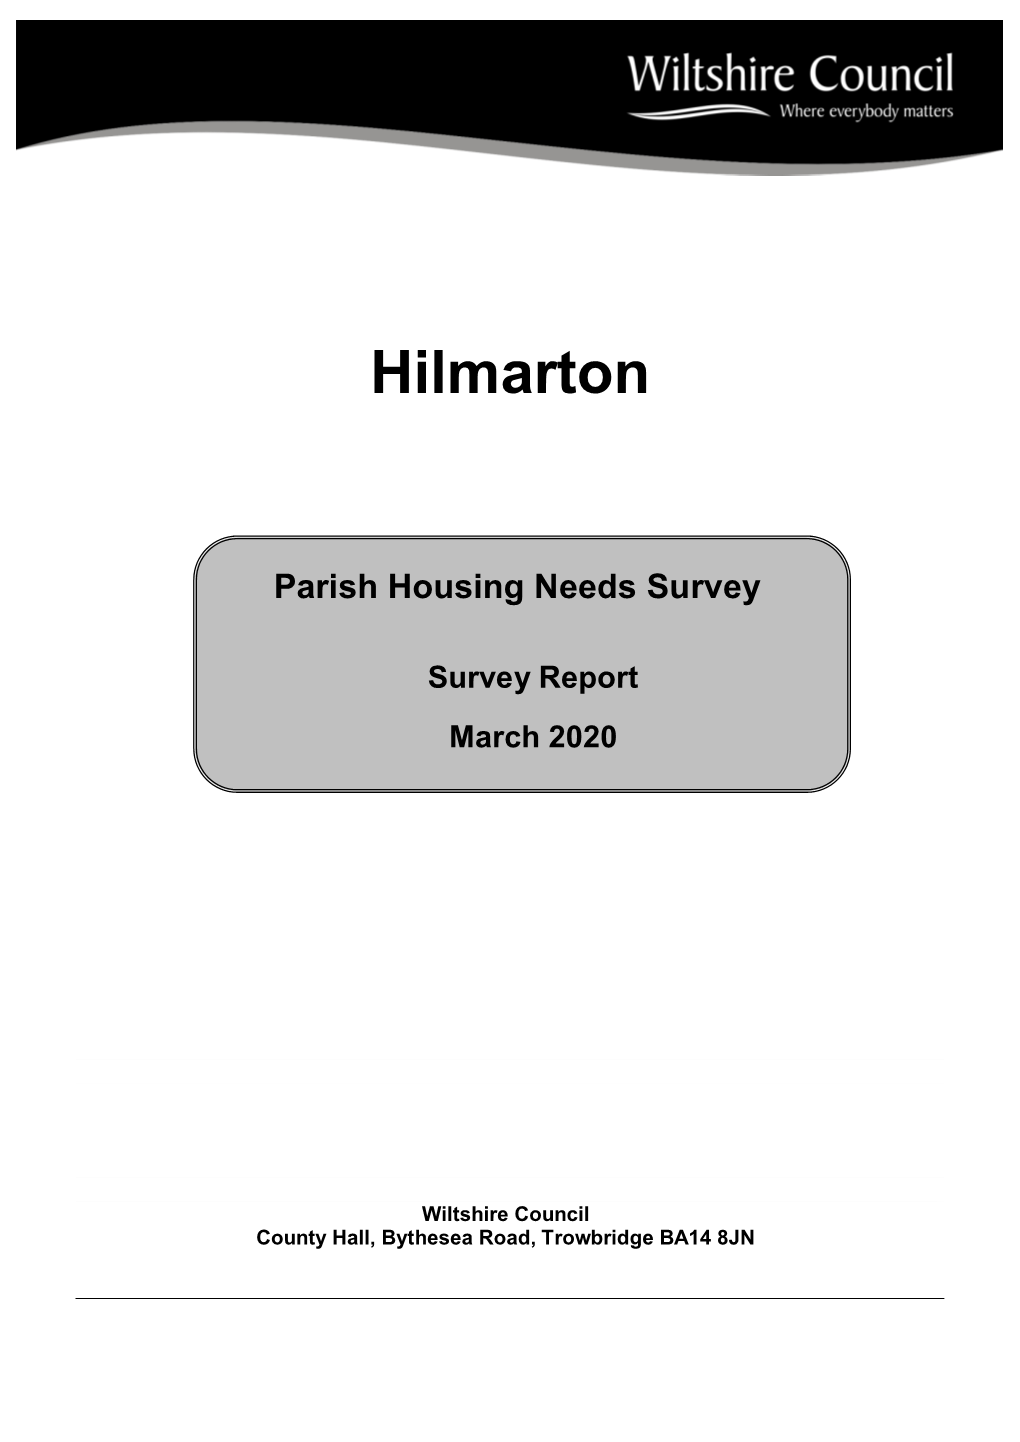 Hilmarton Parish Survey Report